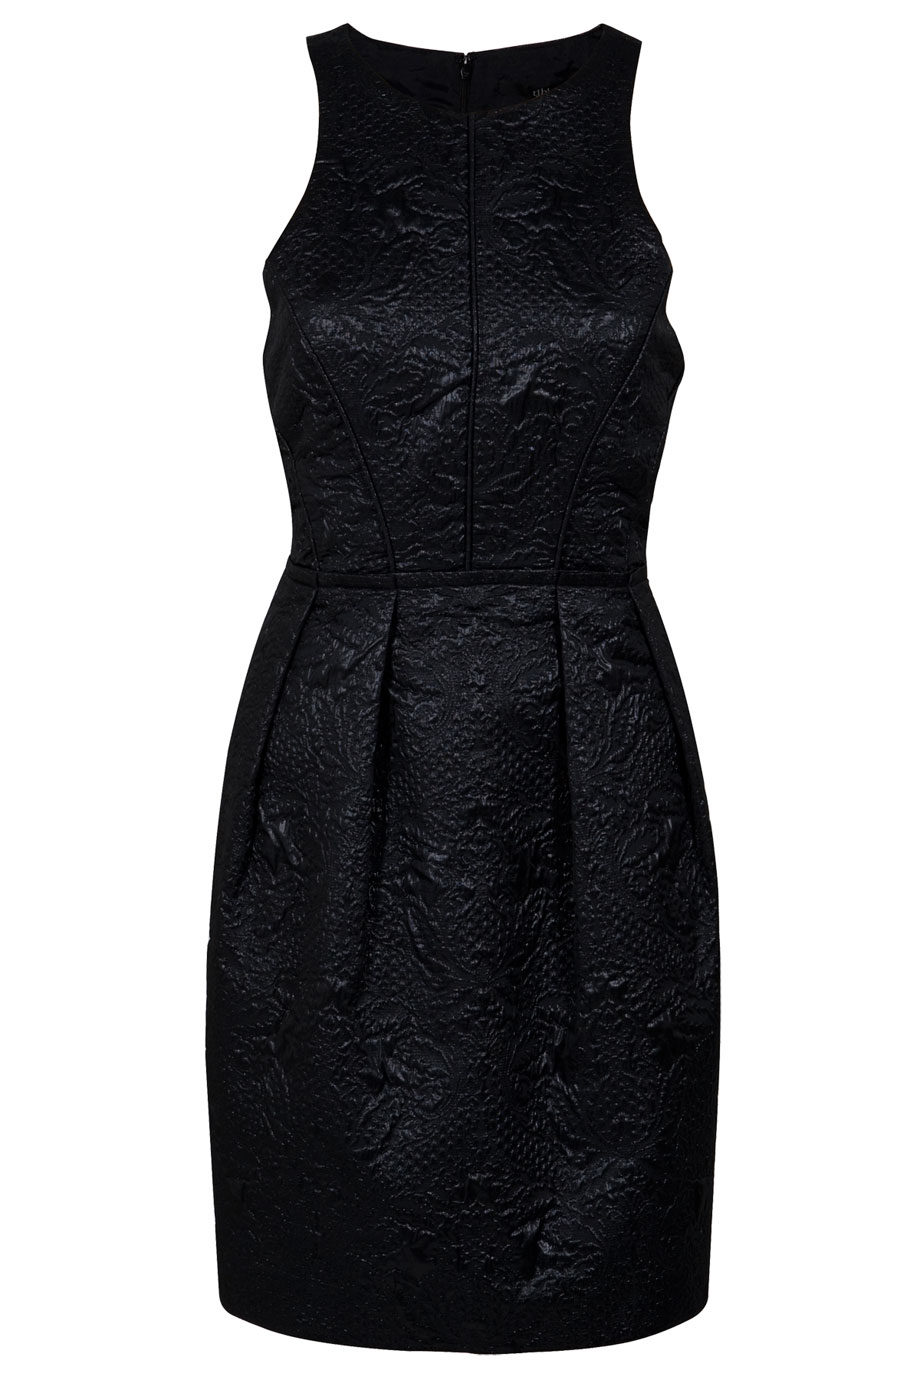 Tibi Baroque Sleeveless Faille Dress in Black | Lyst